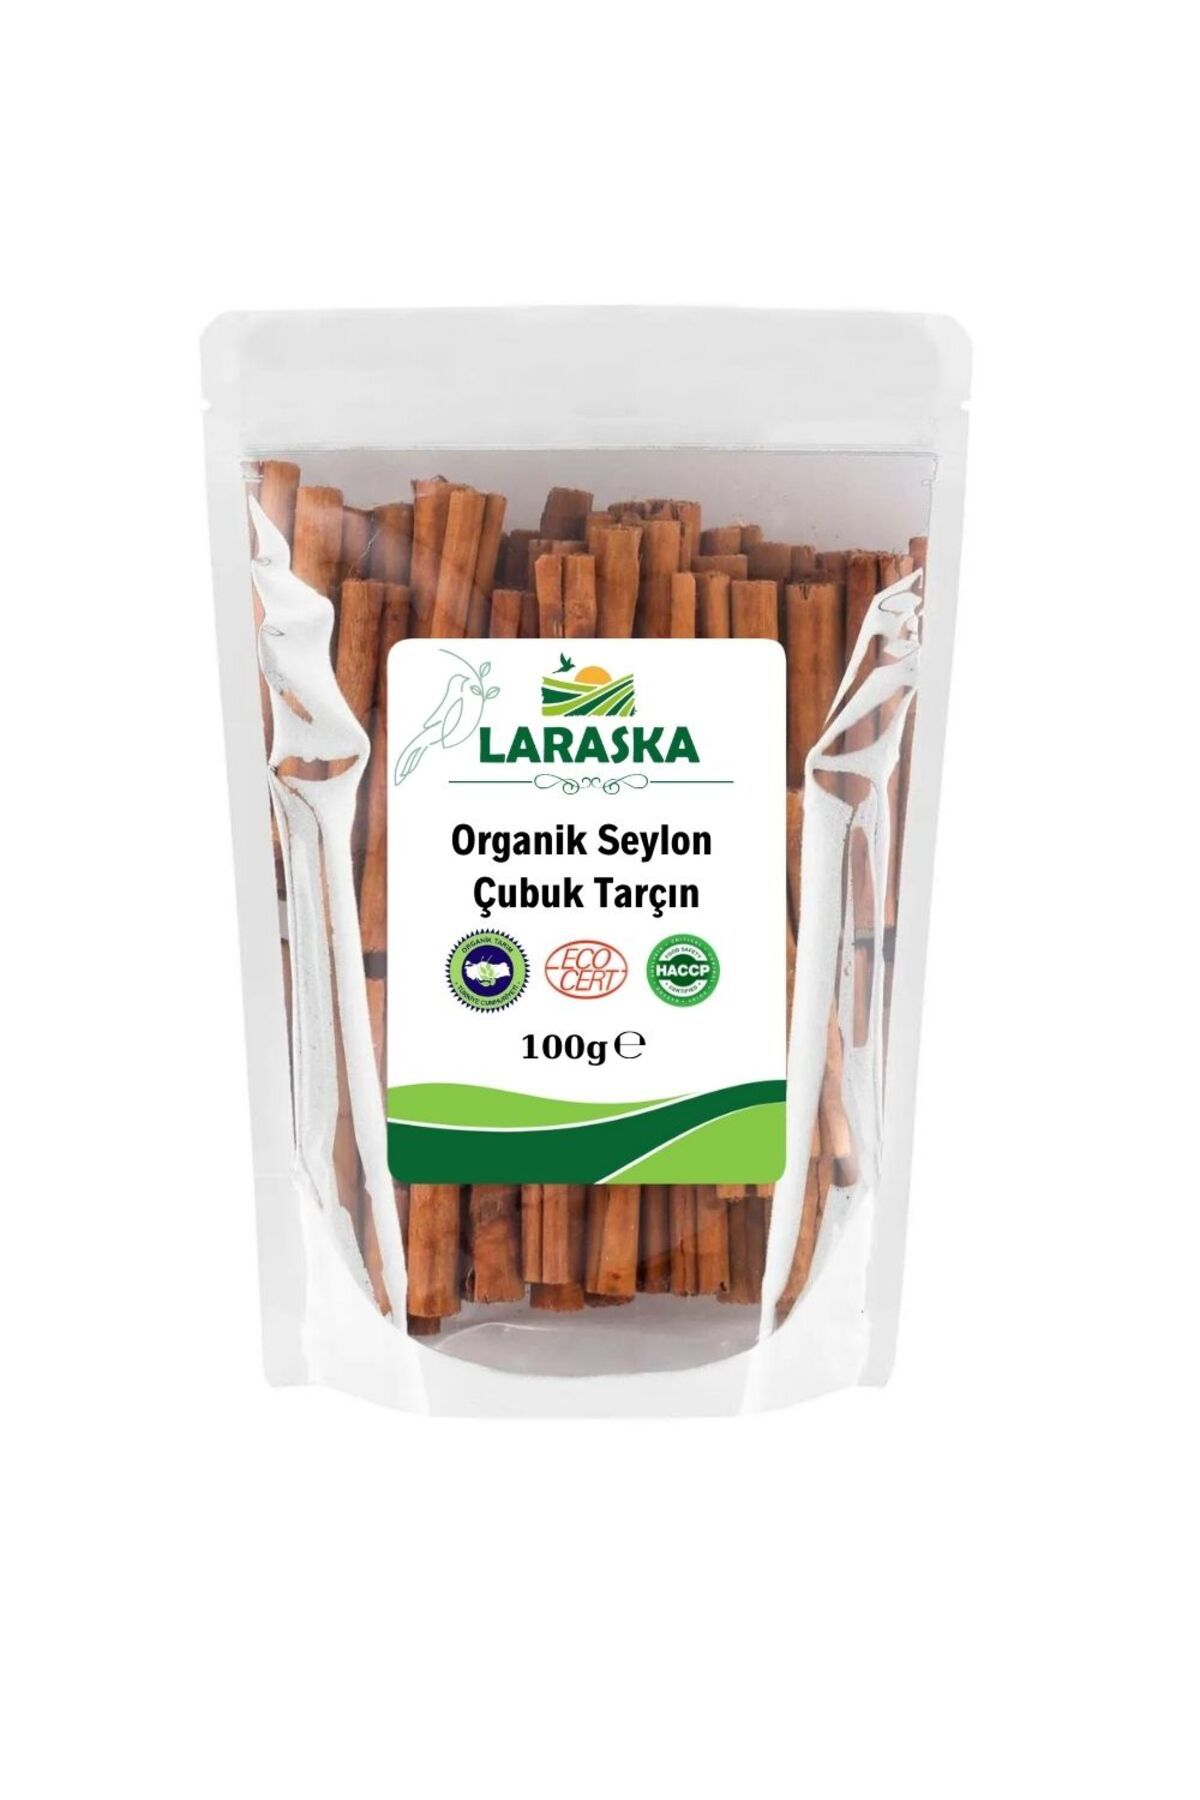 Laraska Organik Organik Seylon - Seylan Çubuk Tarçın 100g - Organic Ceylon Cinnamon Sticks